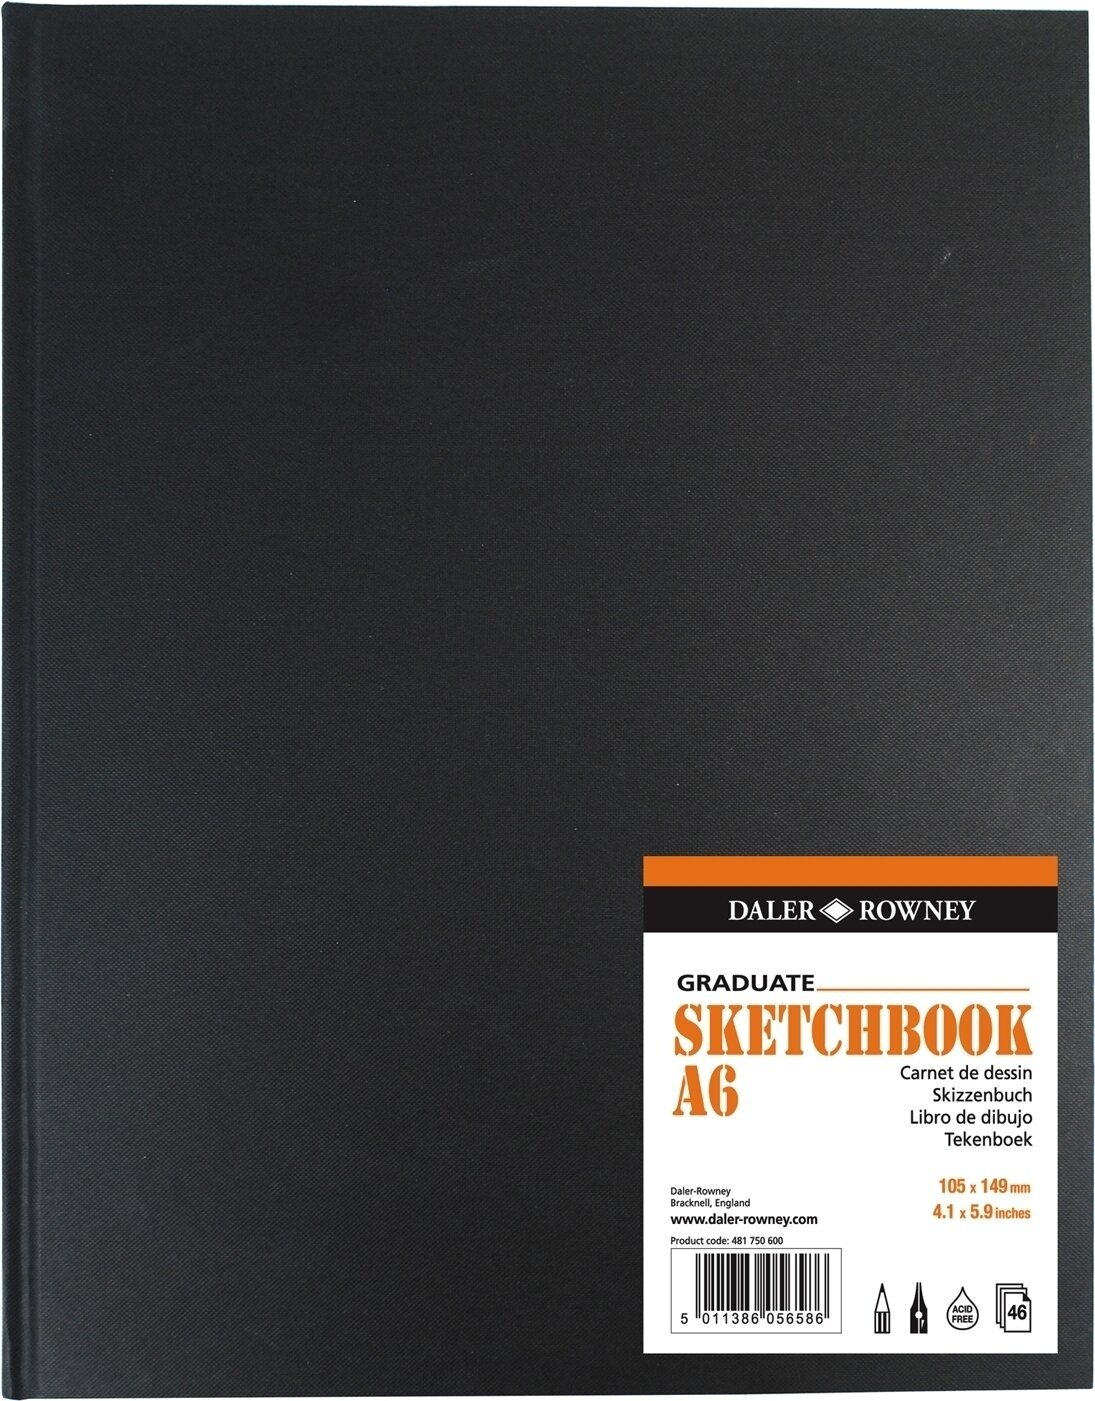 Sketchbook Daler Rowney Graduate Sketchbook Graduate A6 130 g Sketchbook